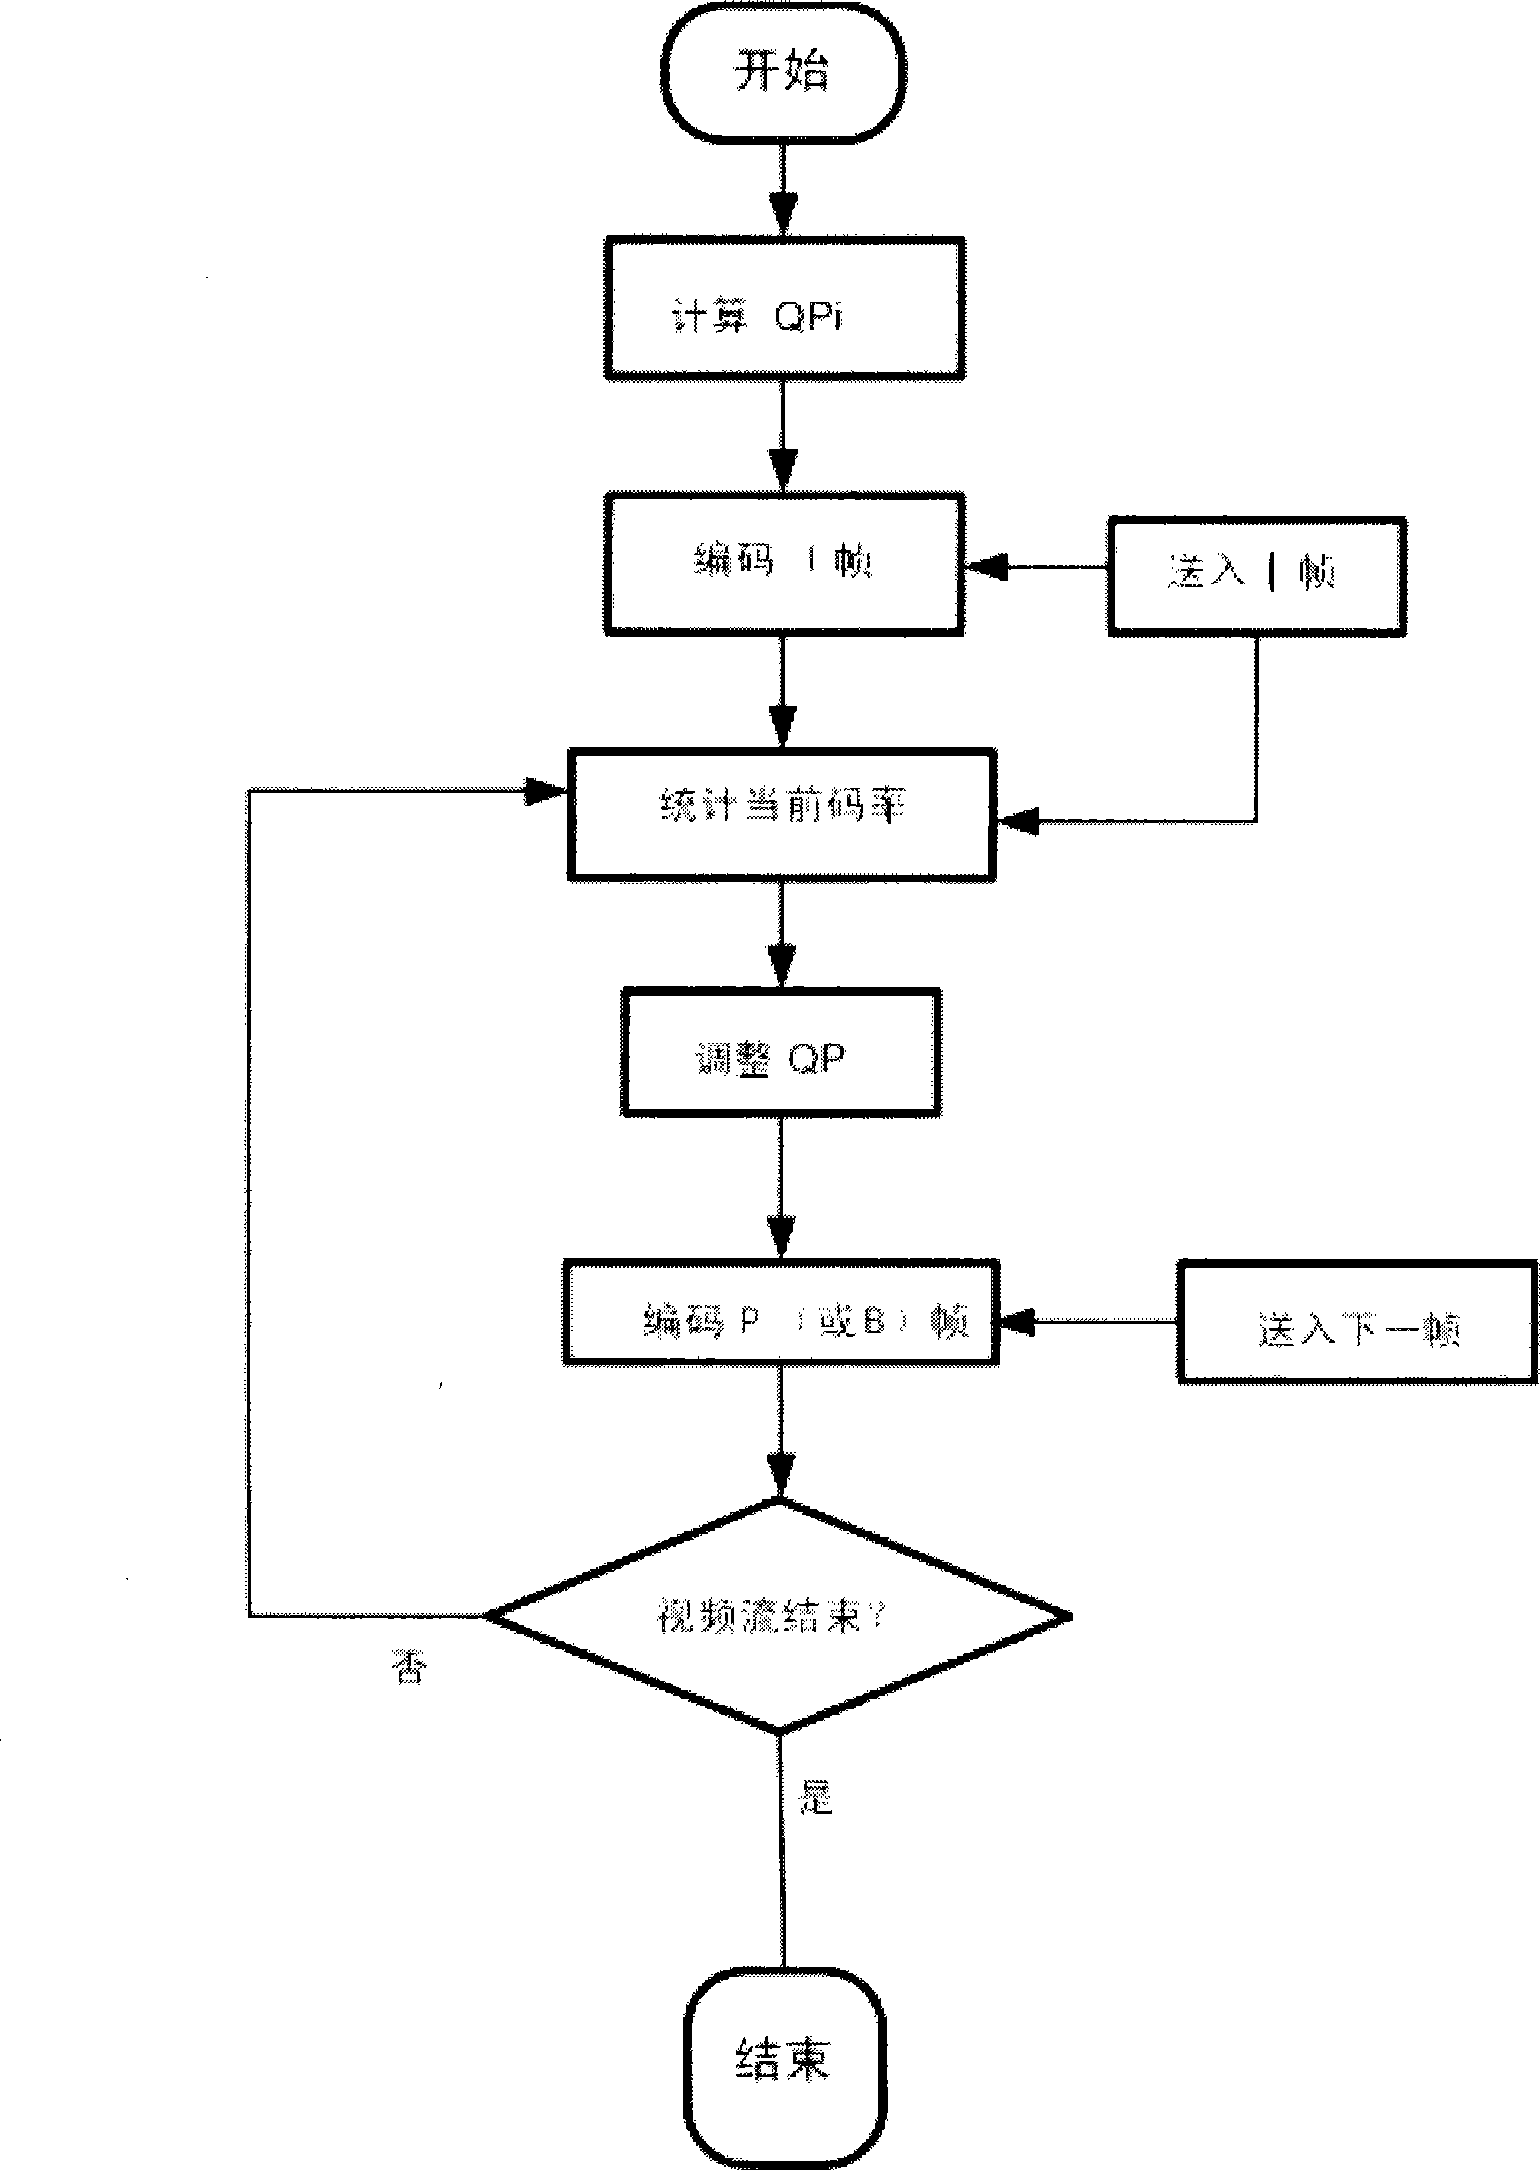 Method for distributing video image set bit based on H.264